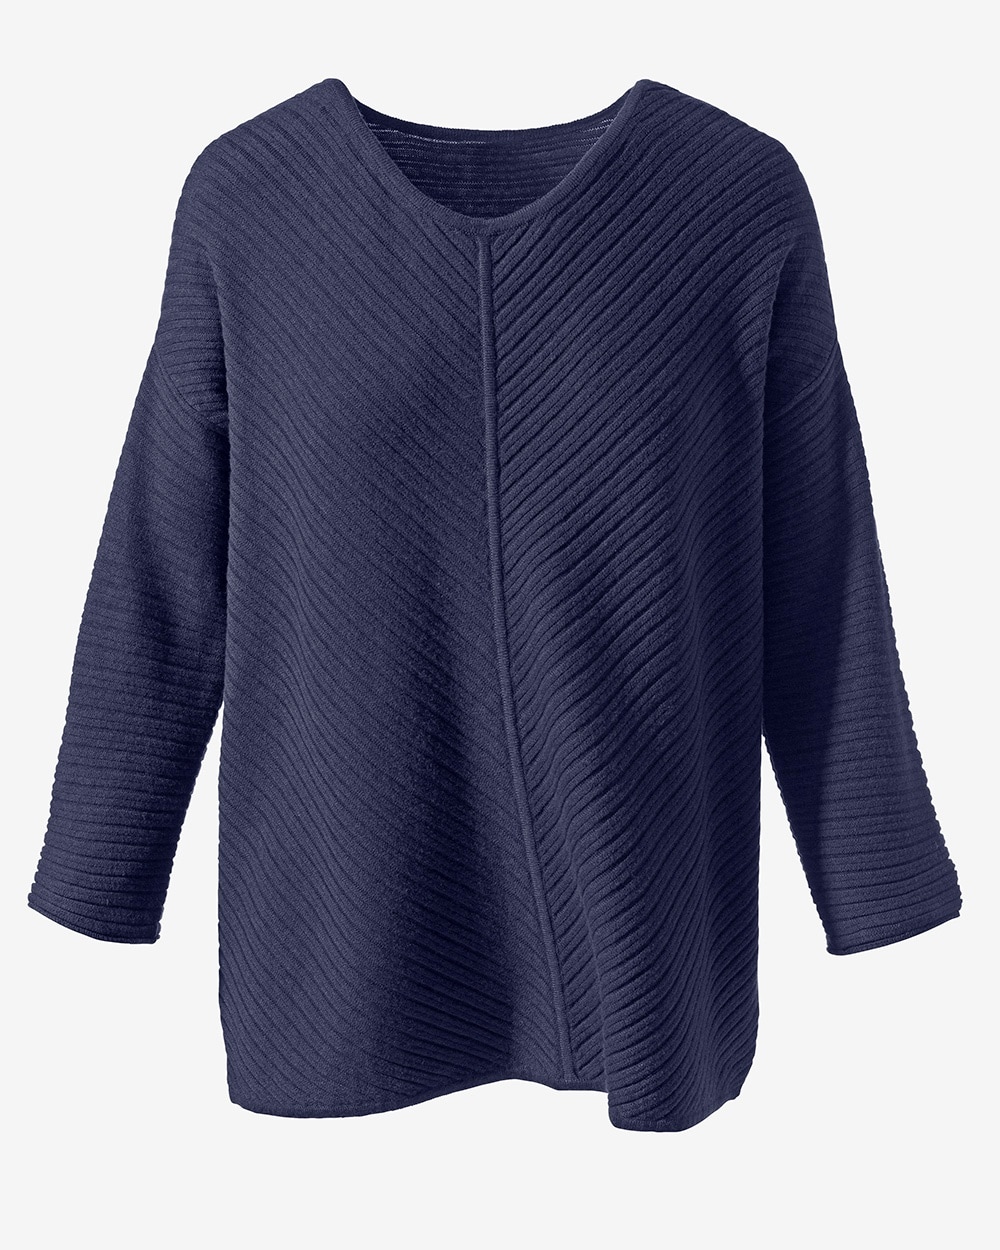 Mitered V-Neck 3/4-Sleeve Sweater